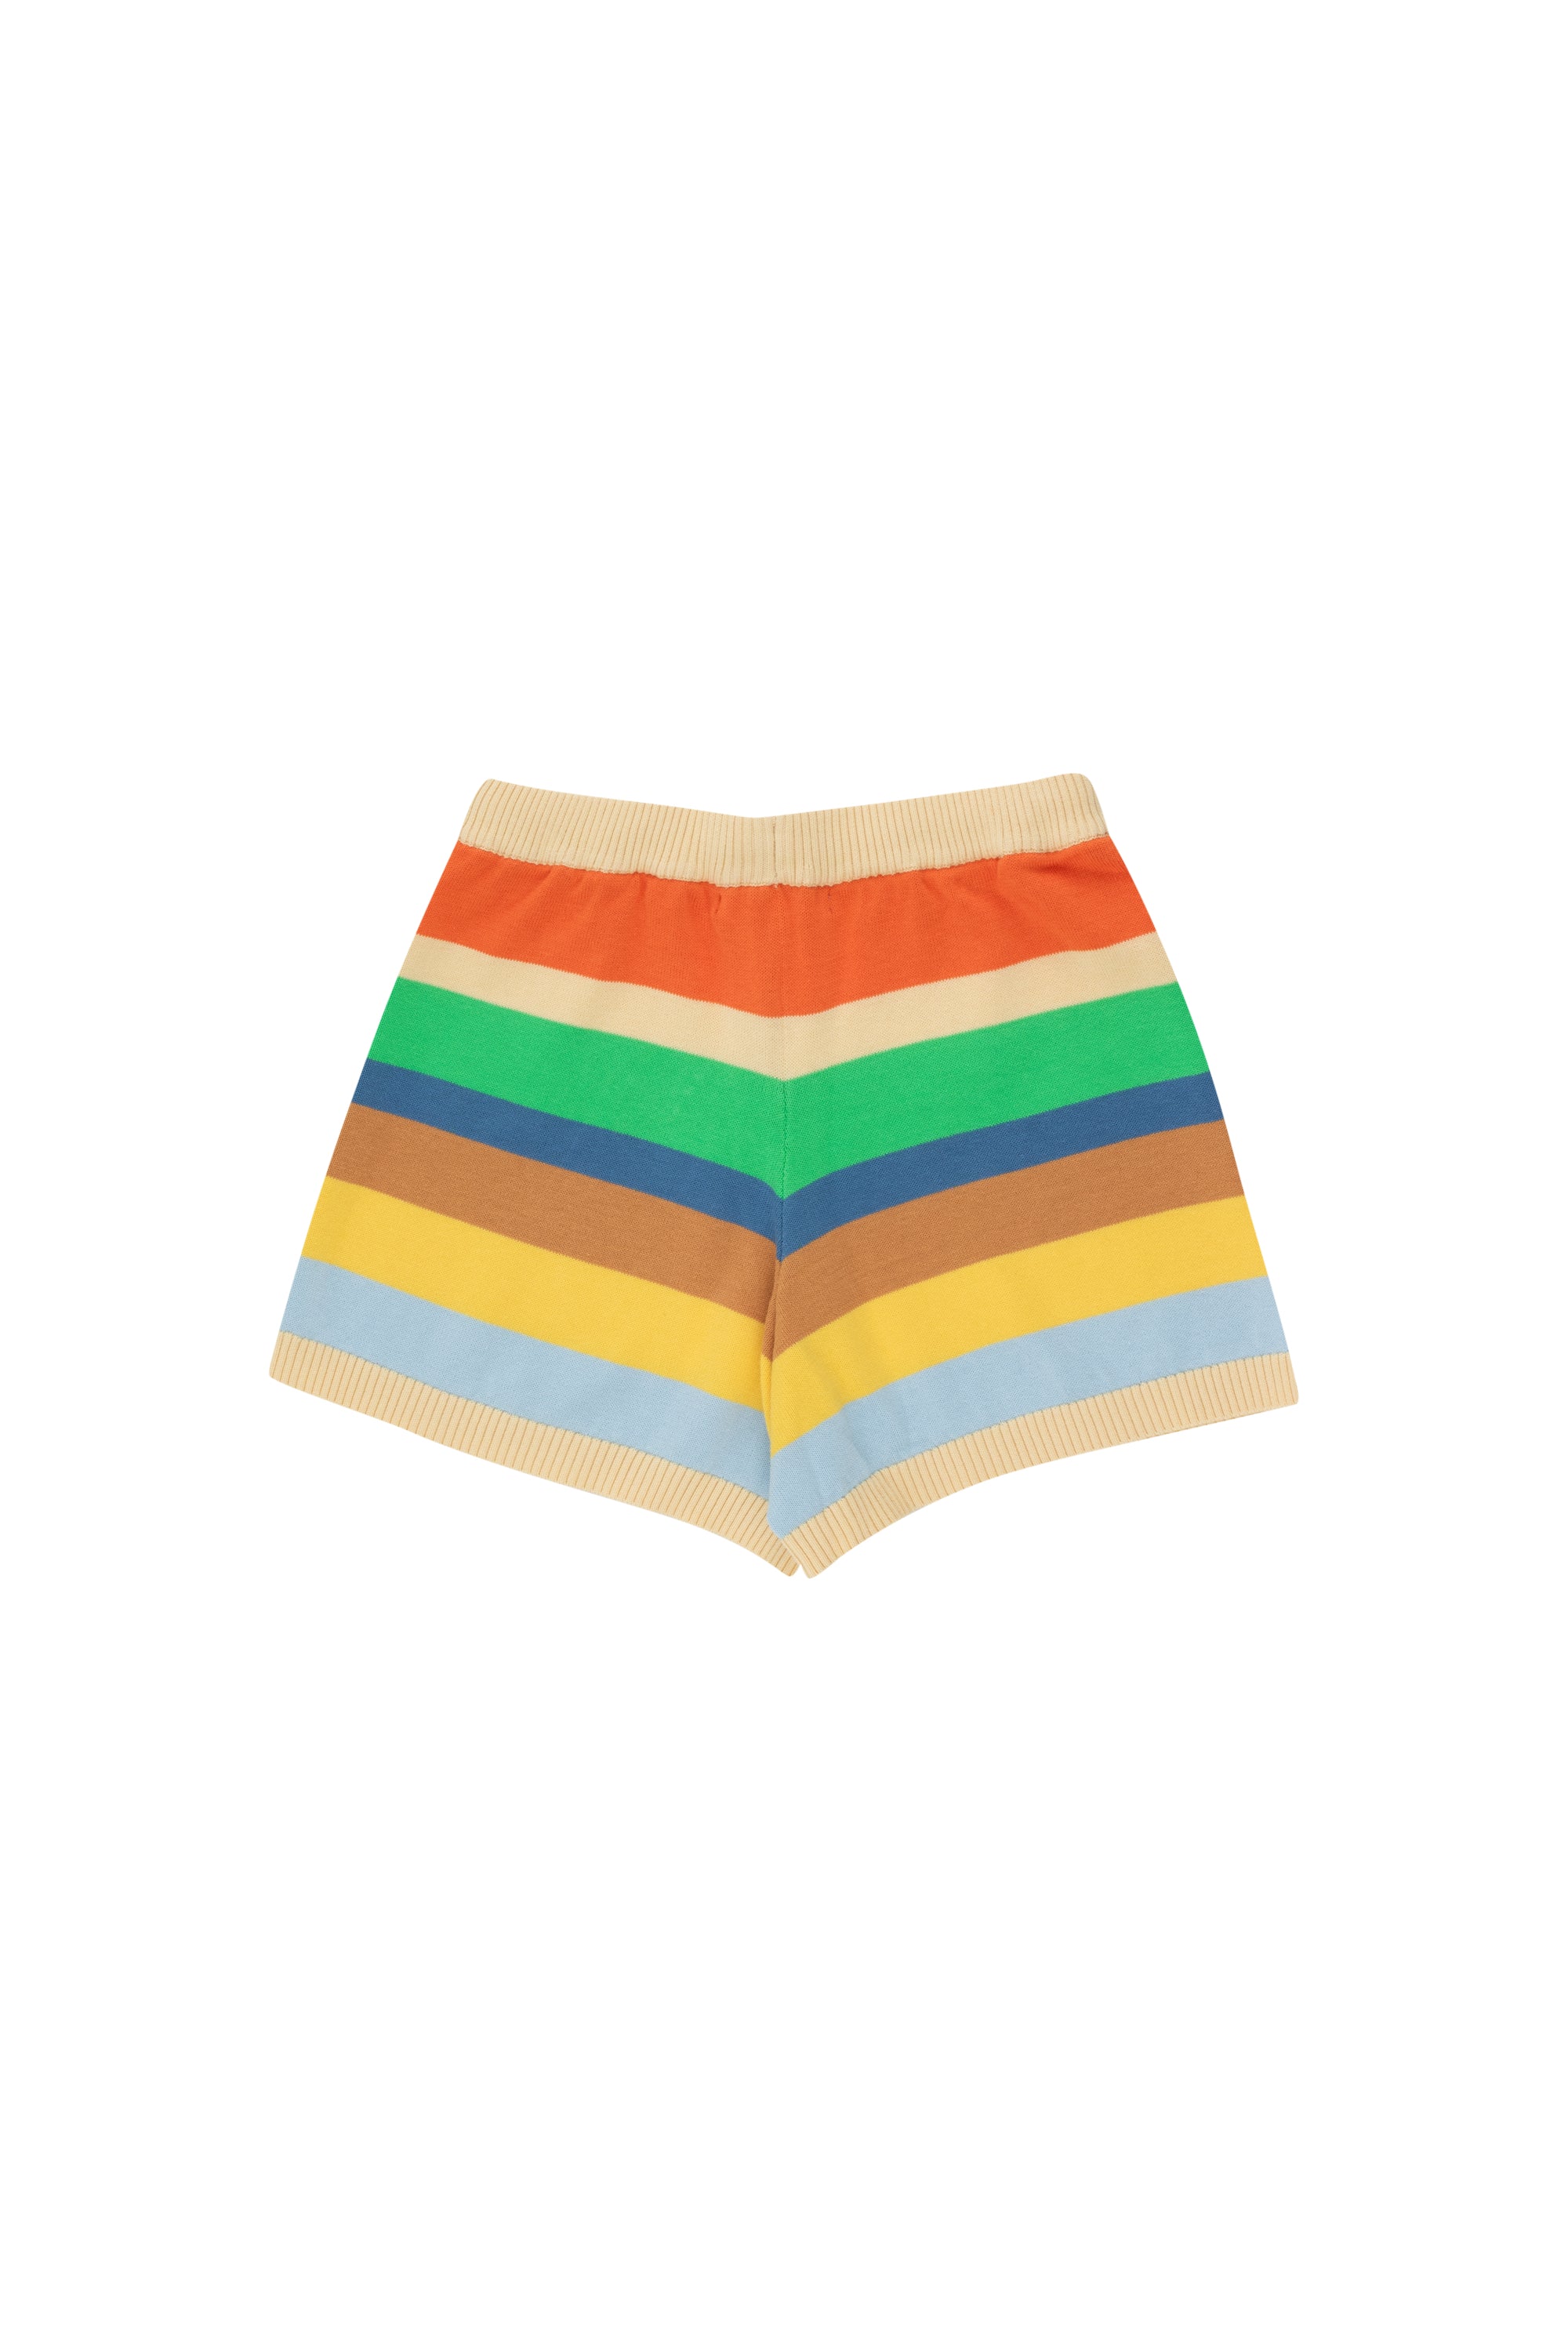 TinyCottons Retro Stripe Shorts